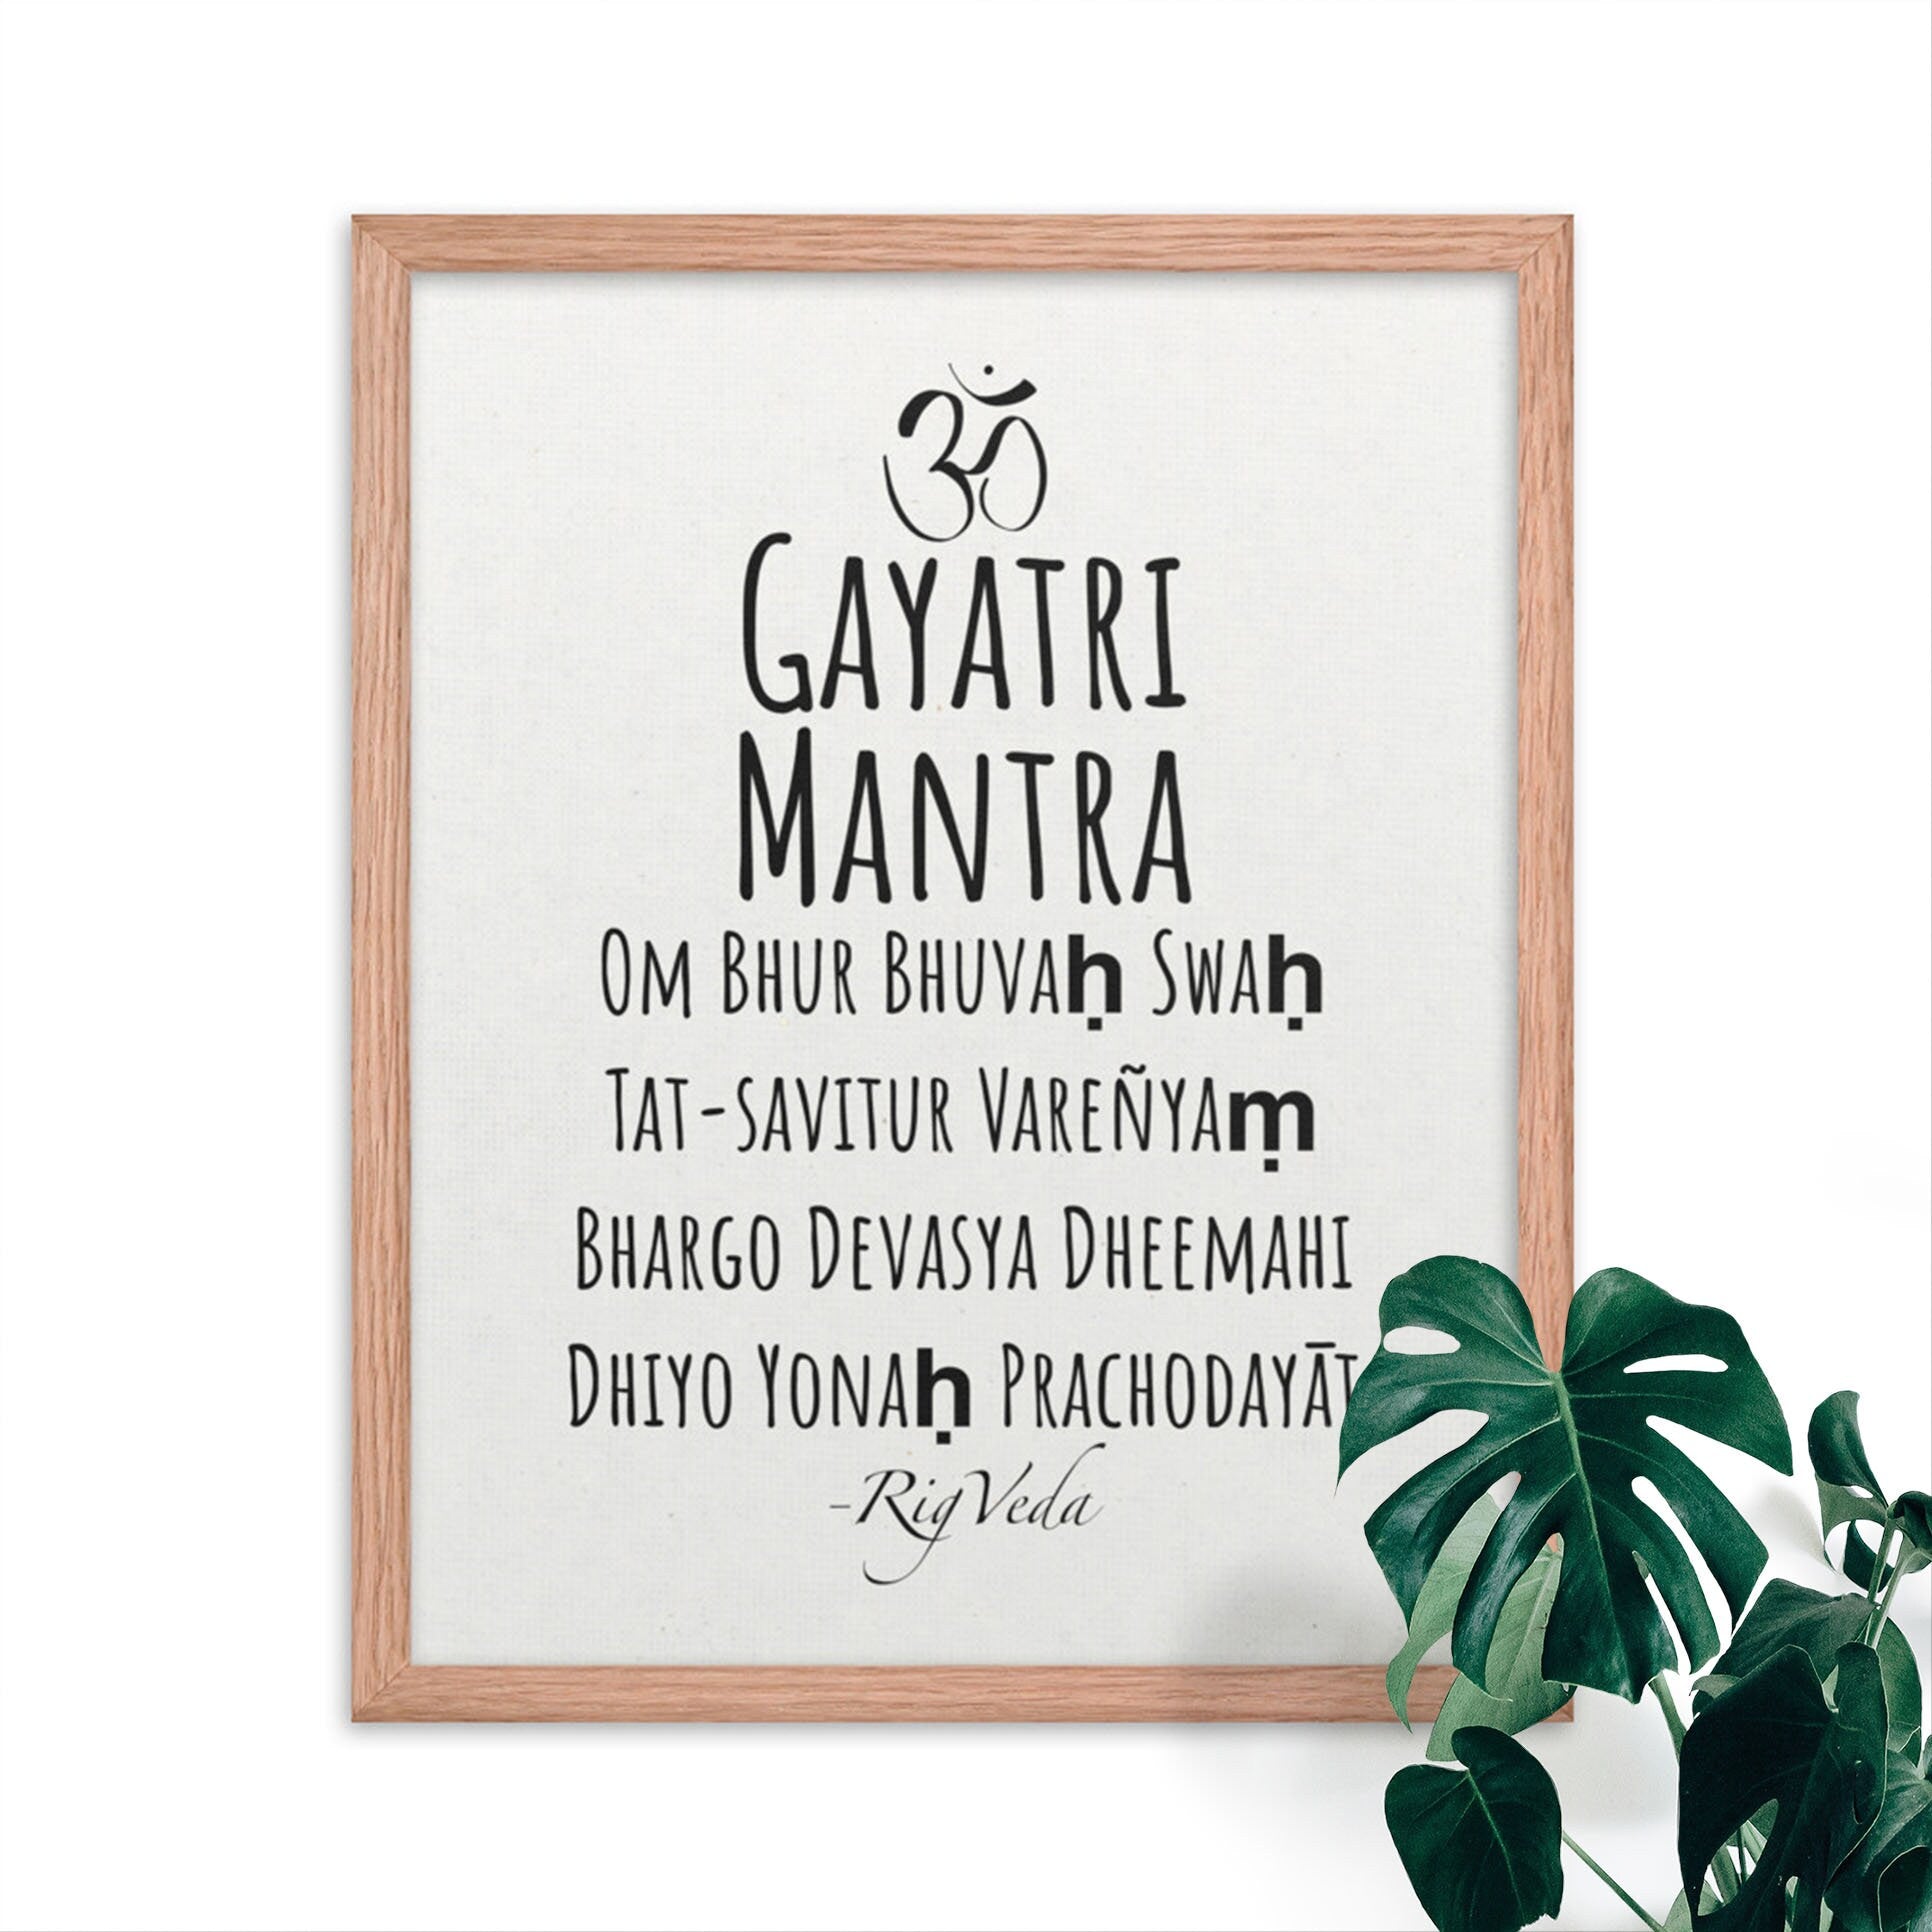 Gayatri mantra in english, black on white minimalist poster in oak frame.